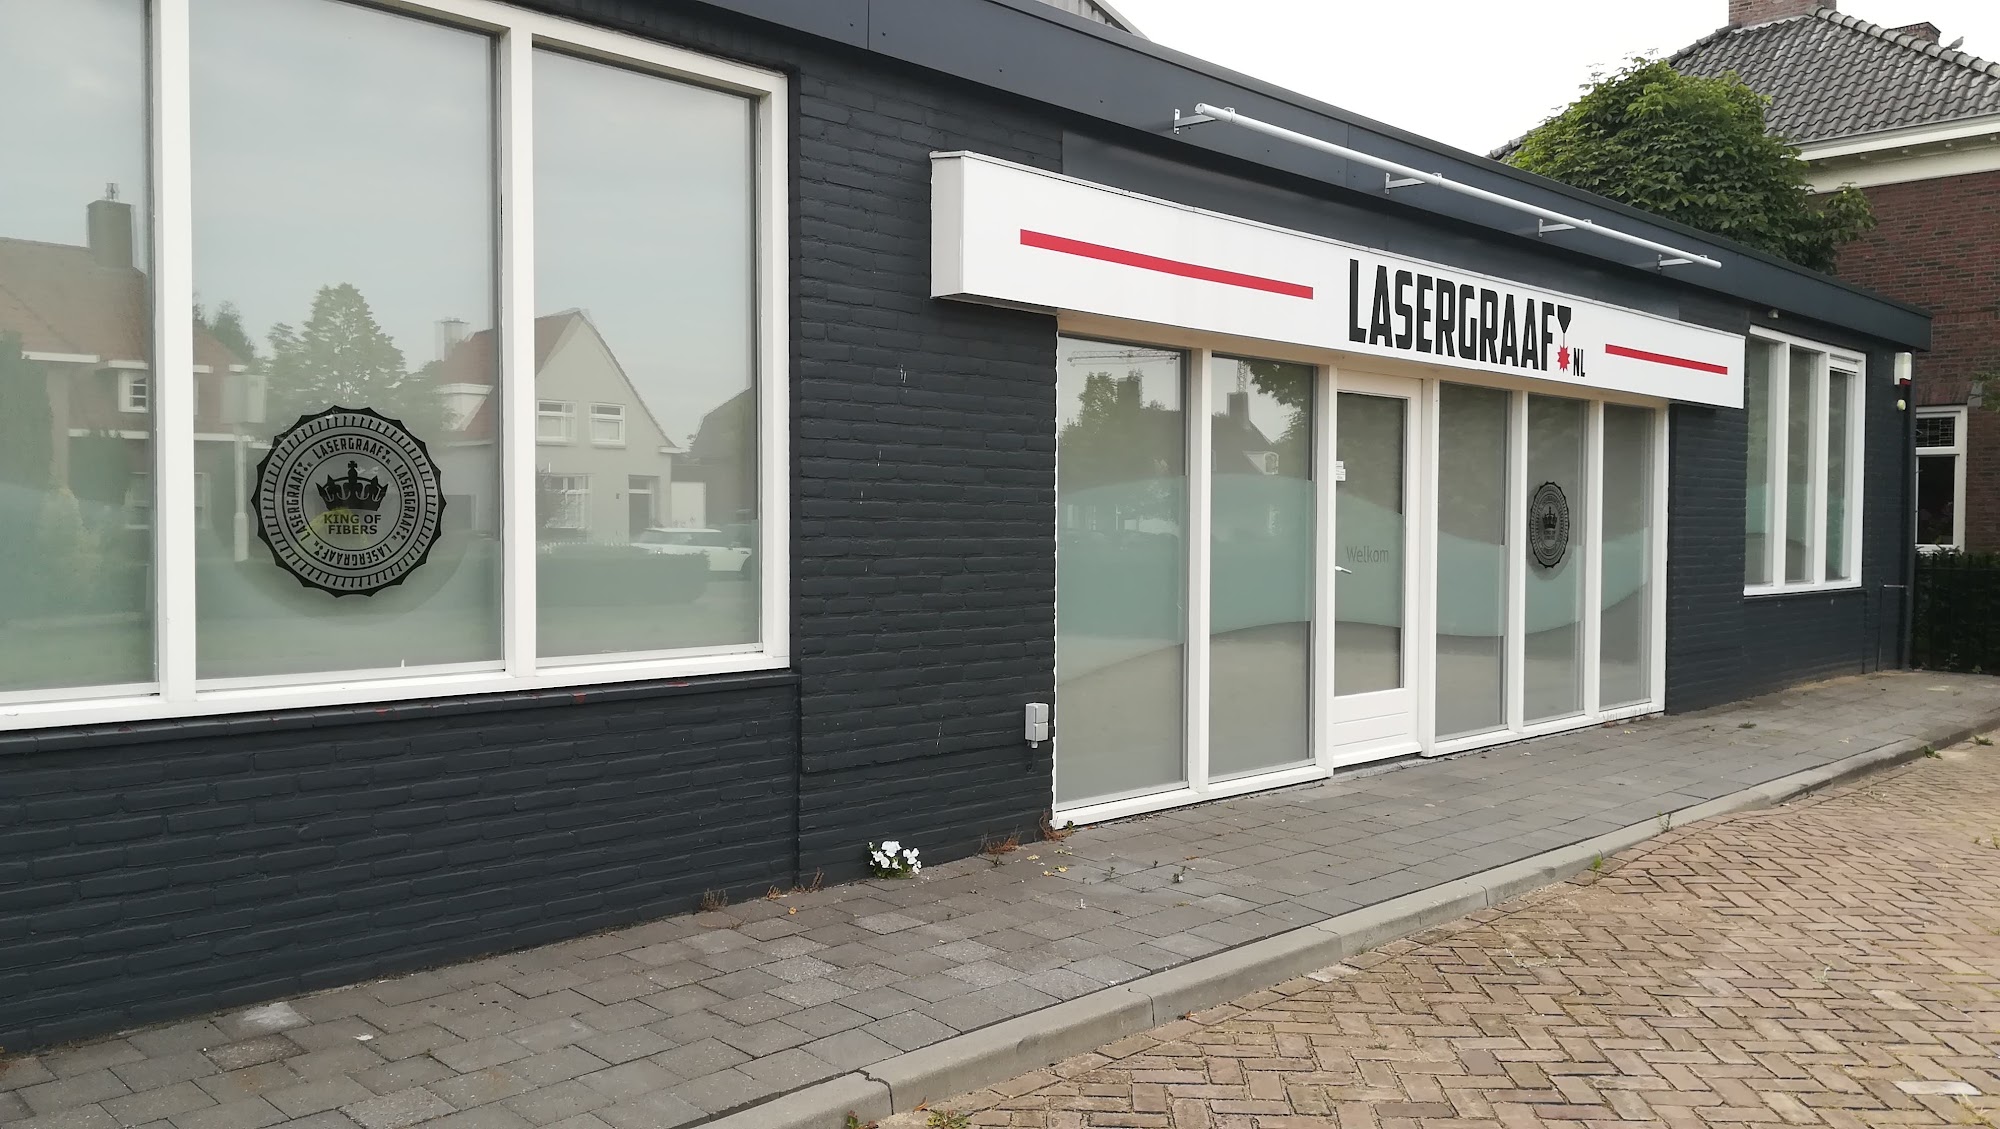 Lasergraaf.nl co2 en fiber lasers